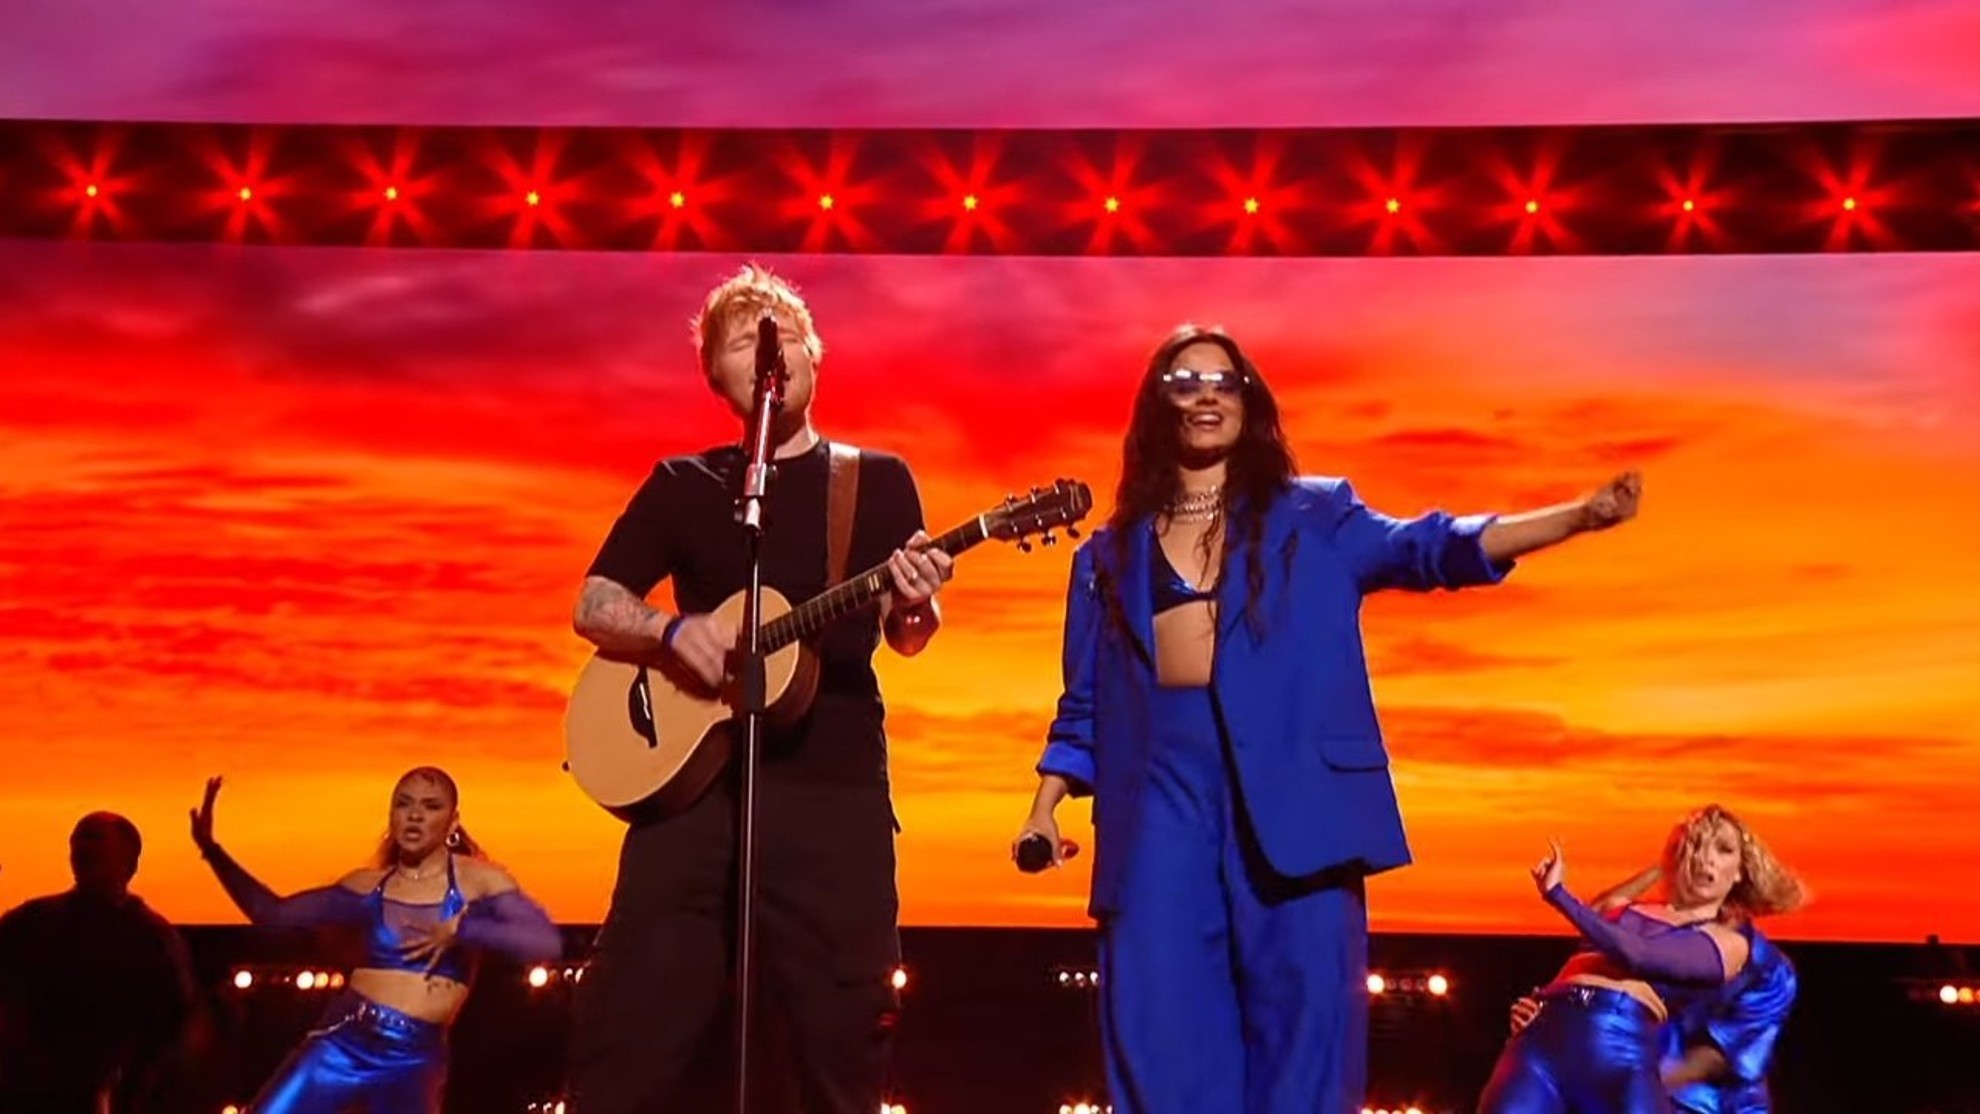 Ed Sheeran and Camila Cabello perform at Concert for Ukraine fundraiser